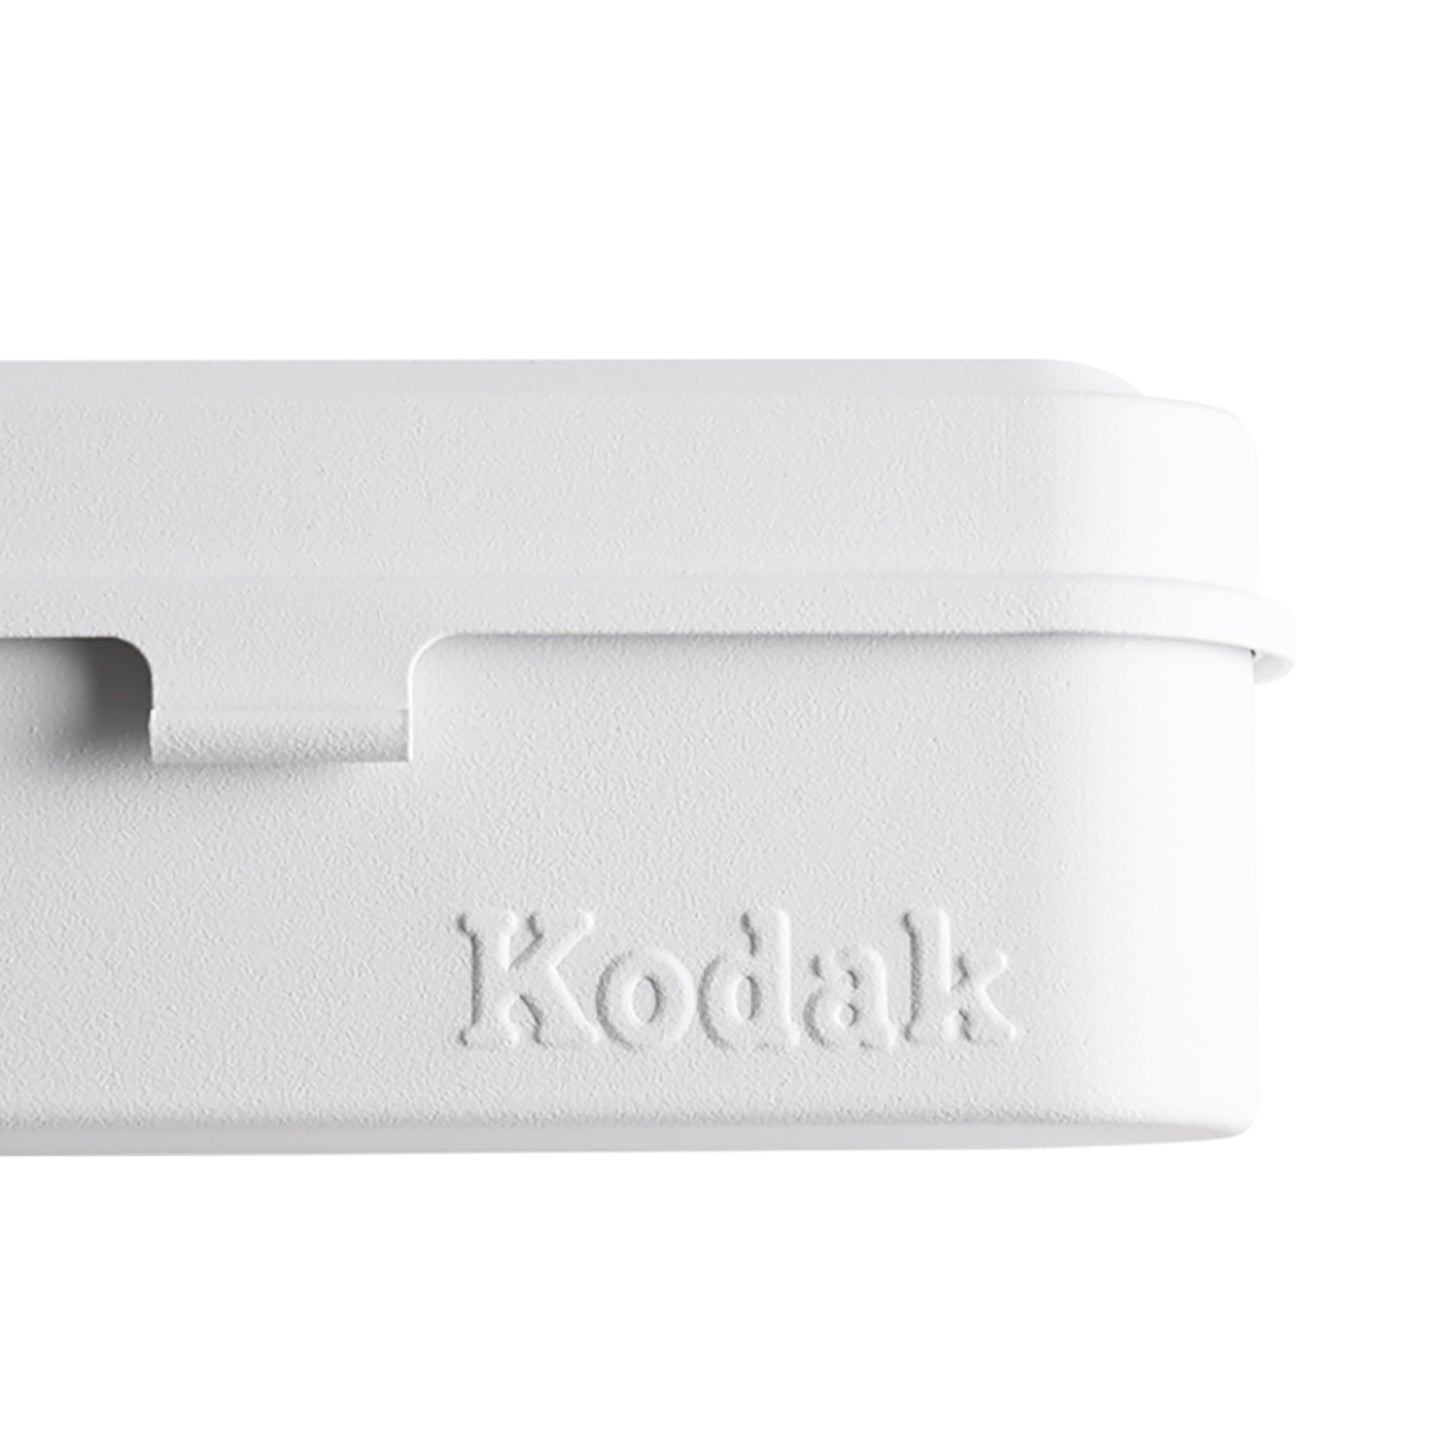 Kodak フィルムケース 135 ホワイト